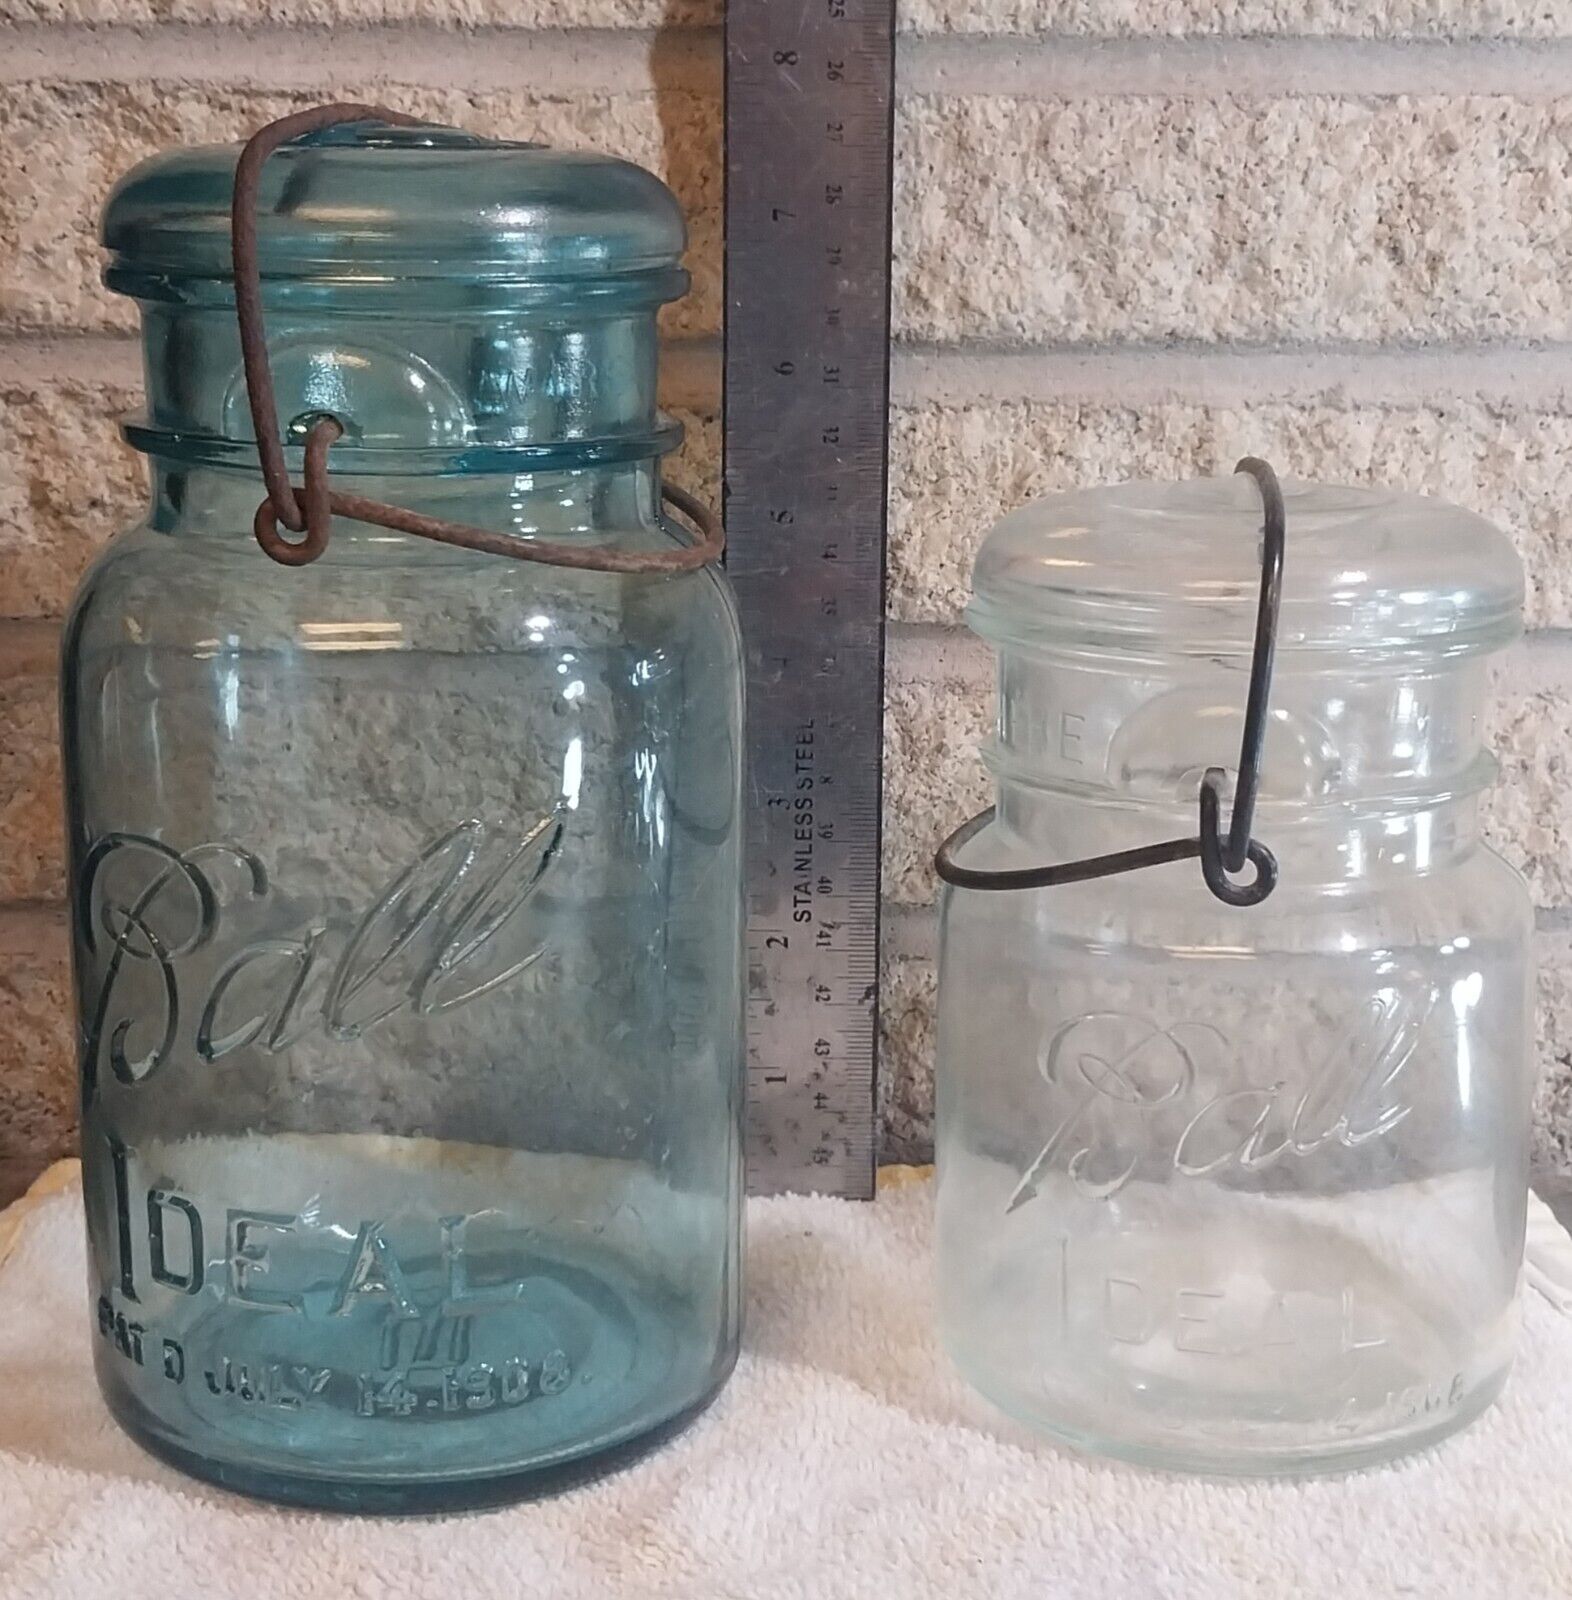 Old Ball IDEAL PAT’D JULY 14, 1908 Quart Canning Jar- Blue Glass Lid & Clear Jar